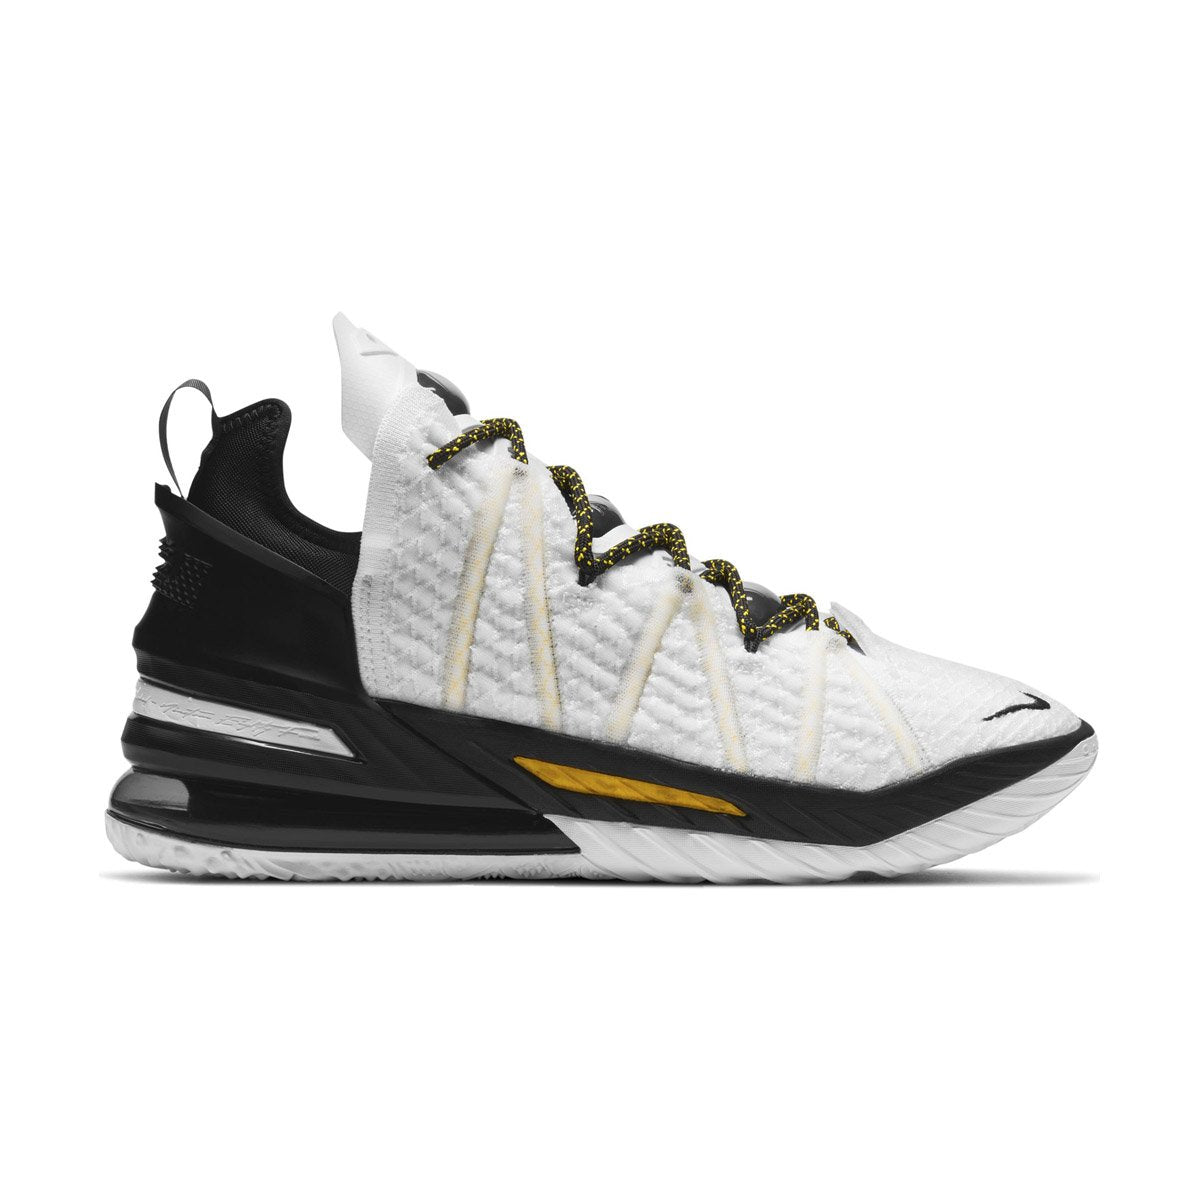 Nike Lebron XVIII Men's Basketball Shoes Black-White-Gum cq9283-007 